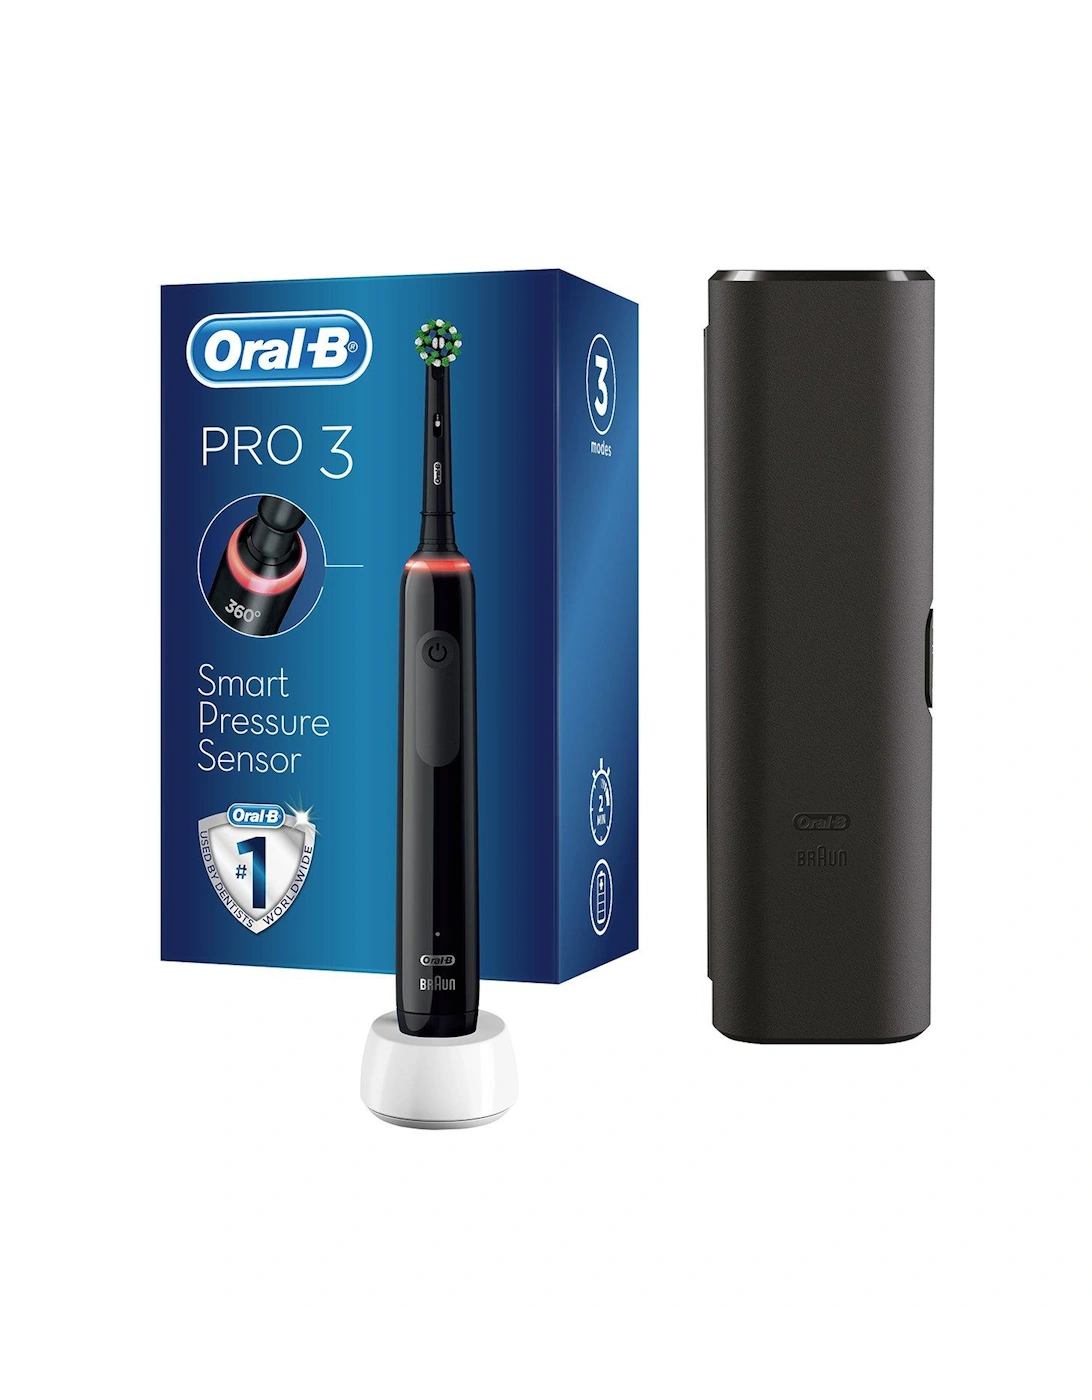 Oral-B Pro 3 - 3500 Cross Action - Black Electric Toothbrush Designed By Braun + Bonus Travel Case, 2 of 1